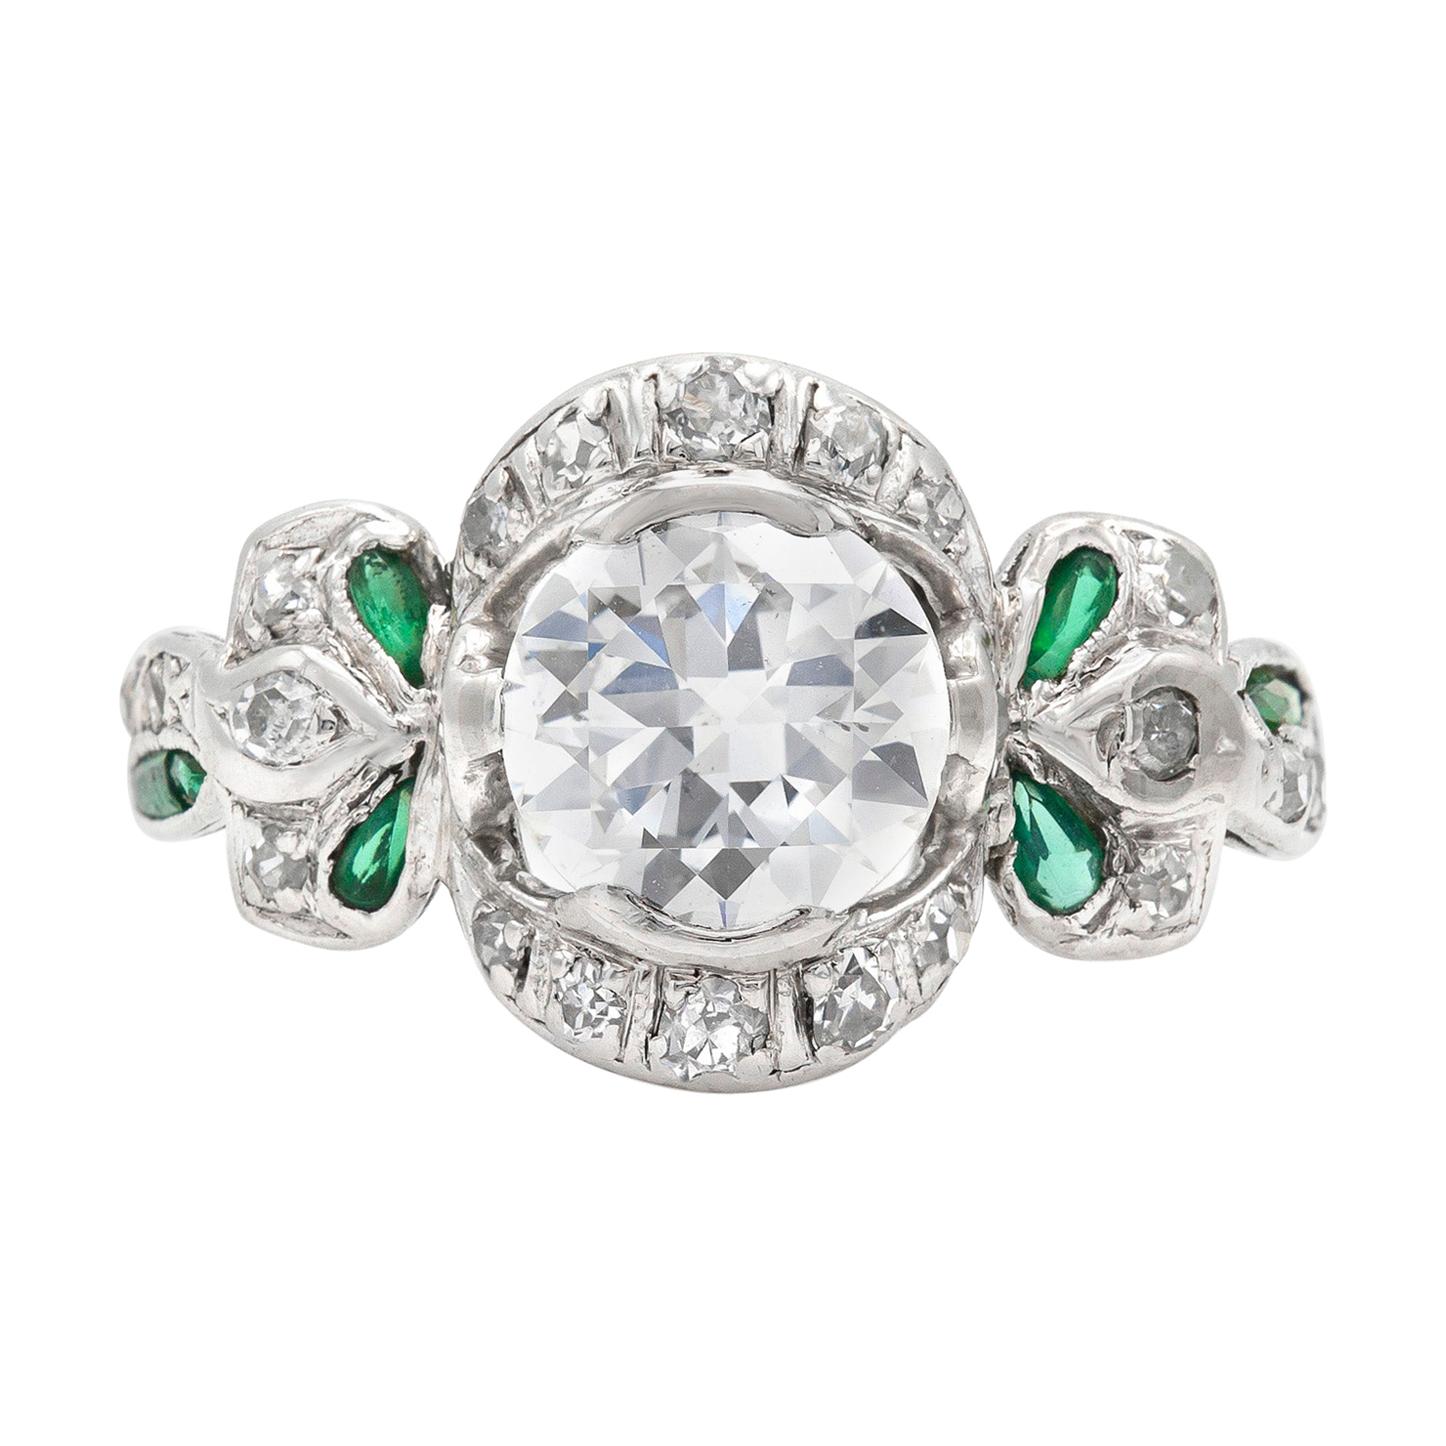 Edwardian 1.30 Carat Old European Cut Diamond Ring with Emeralds